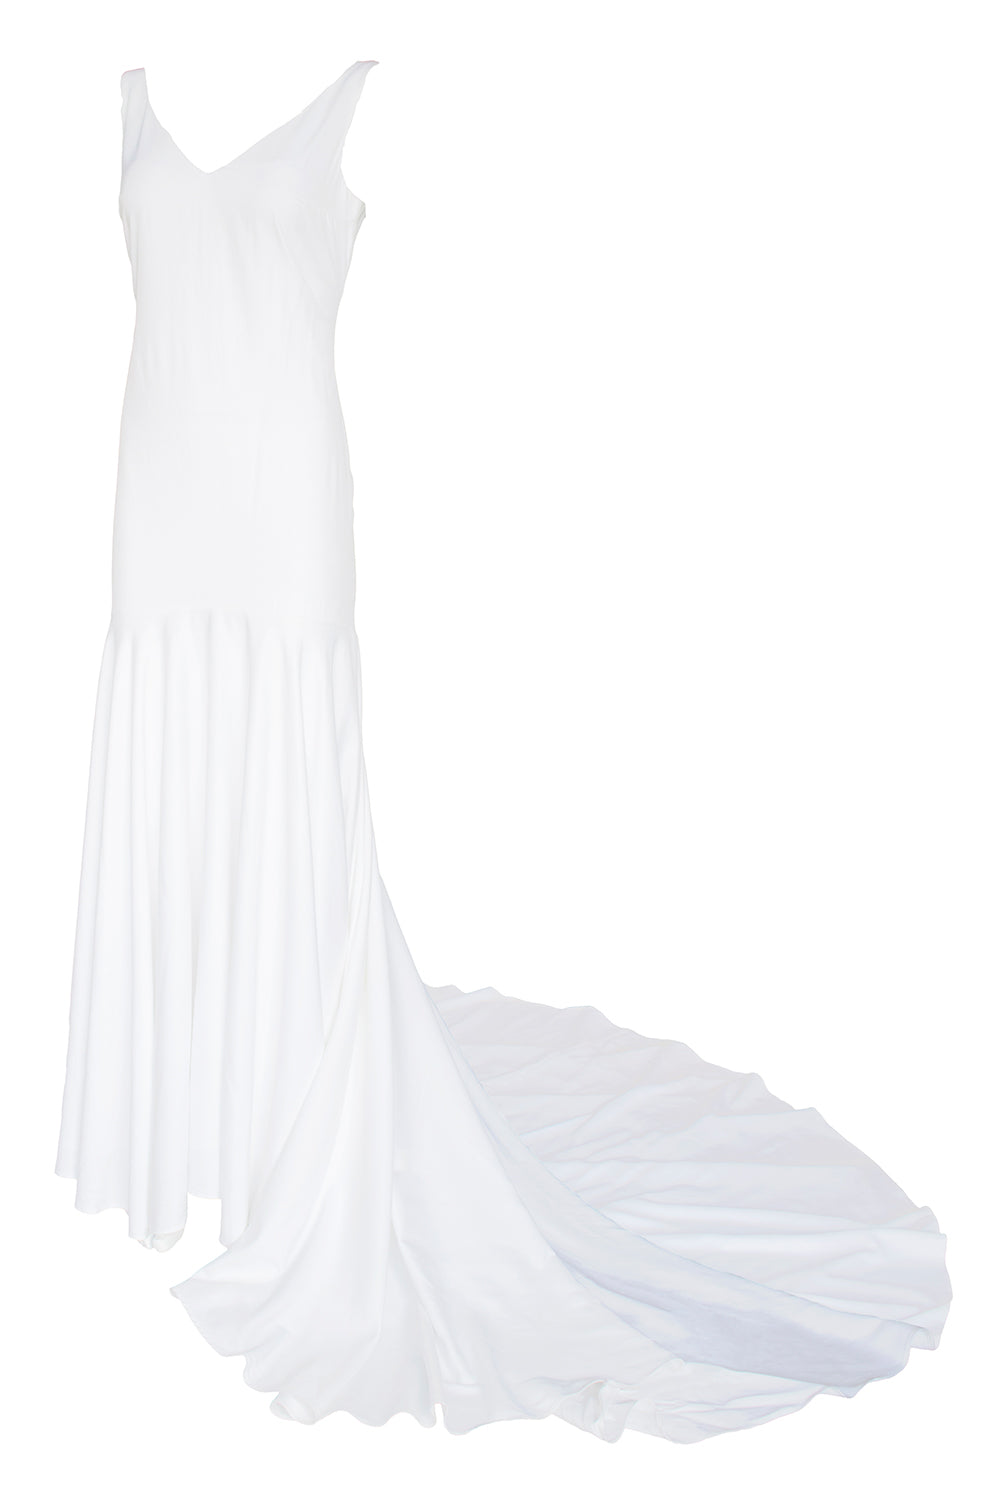 The Blake Wedding Dress - Custom Made